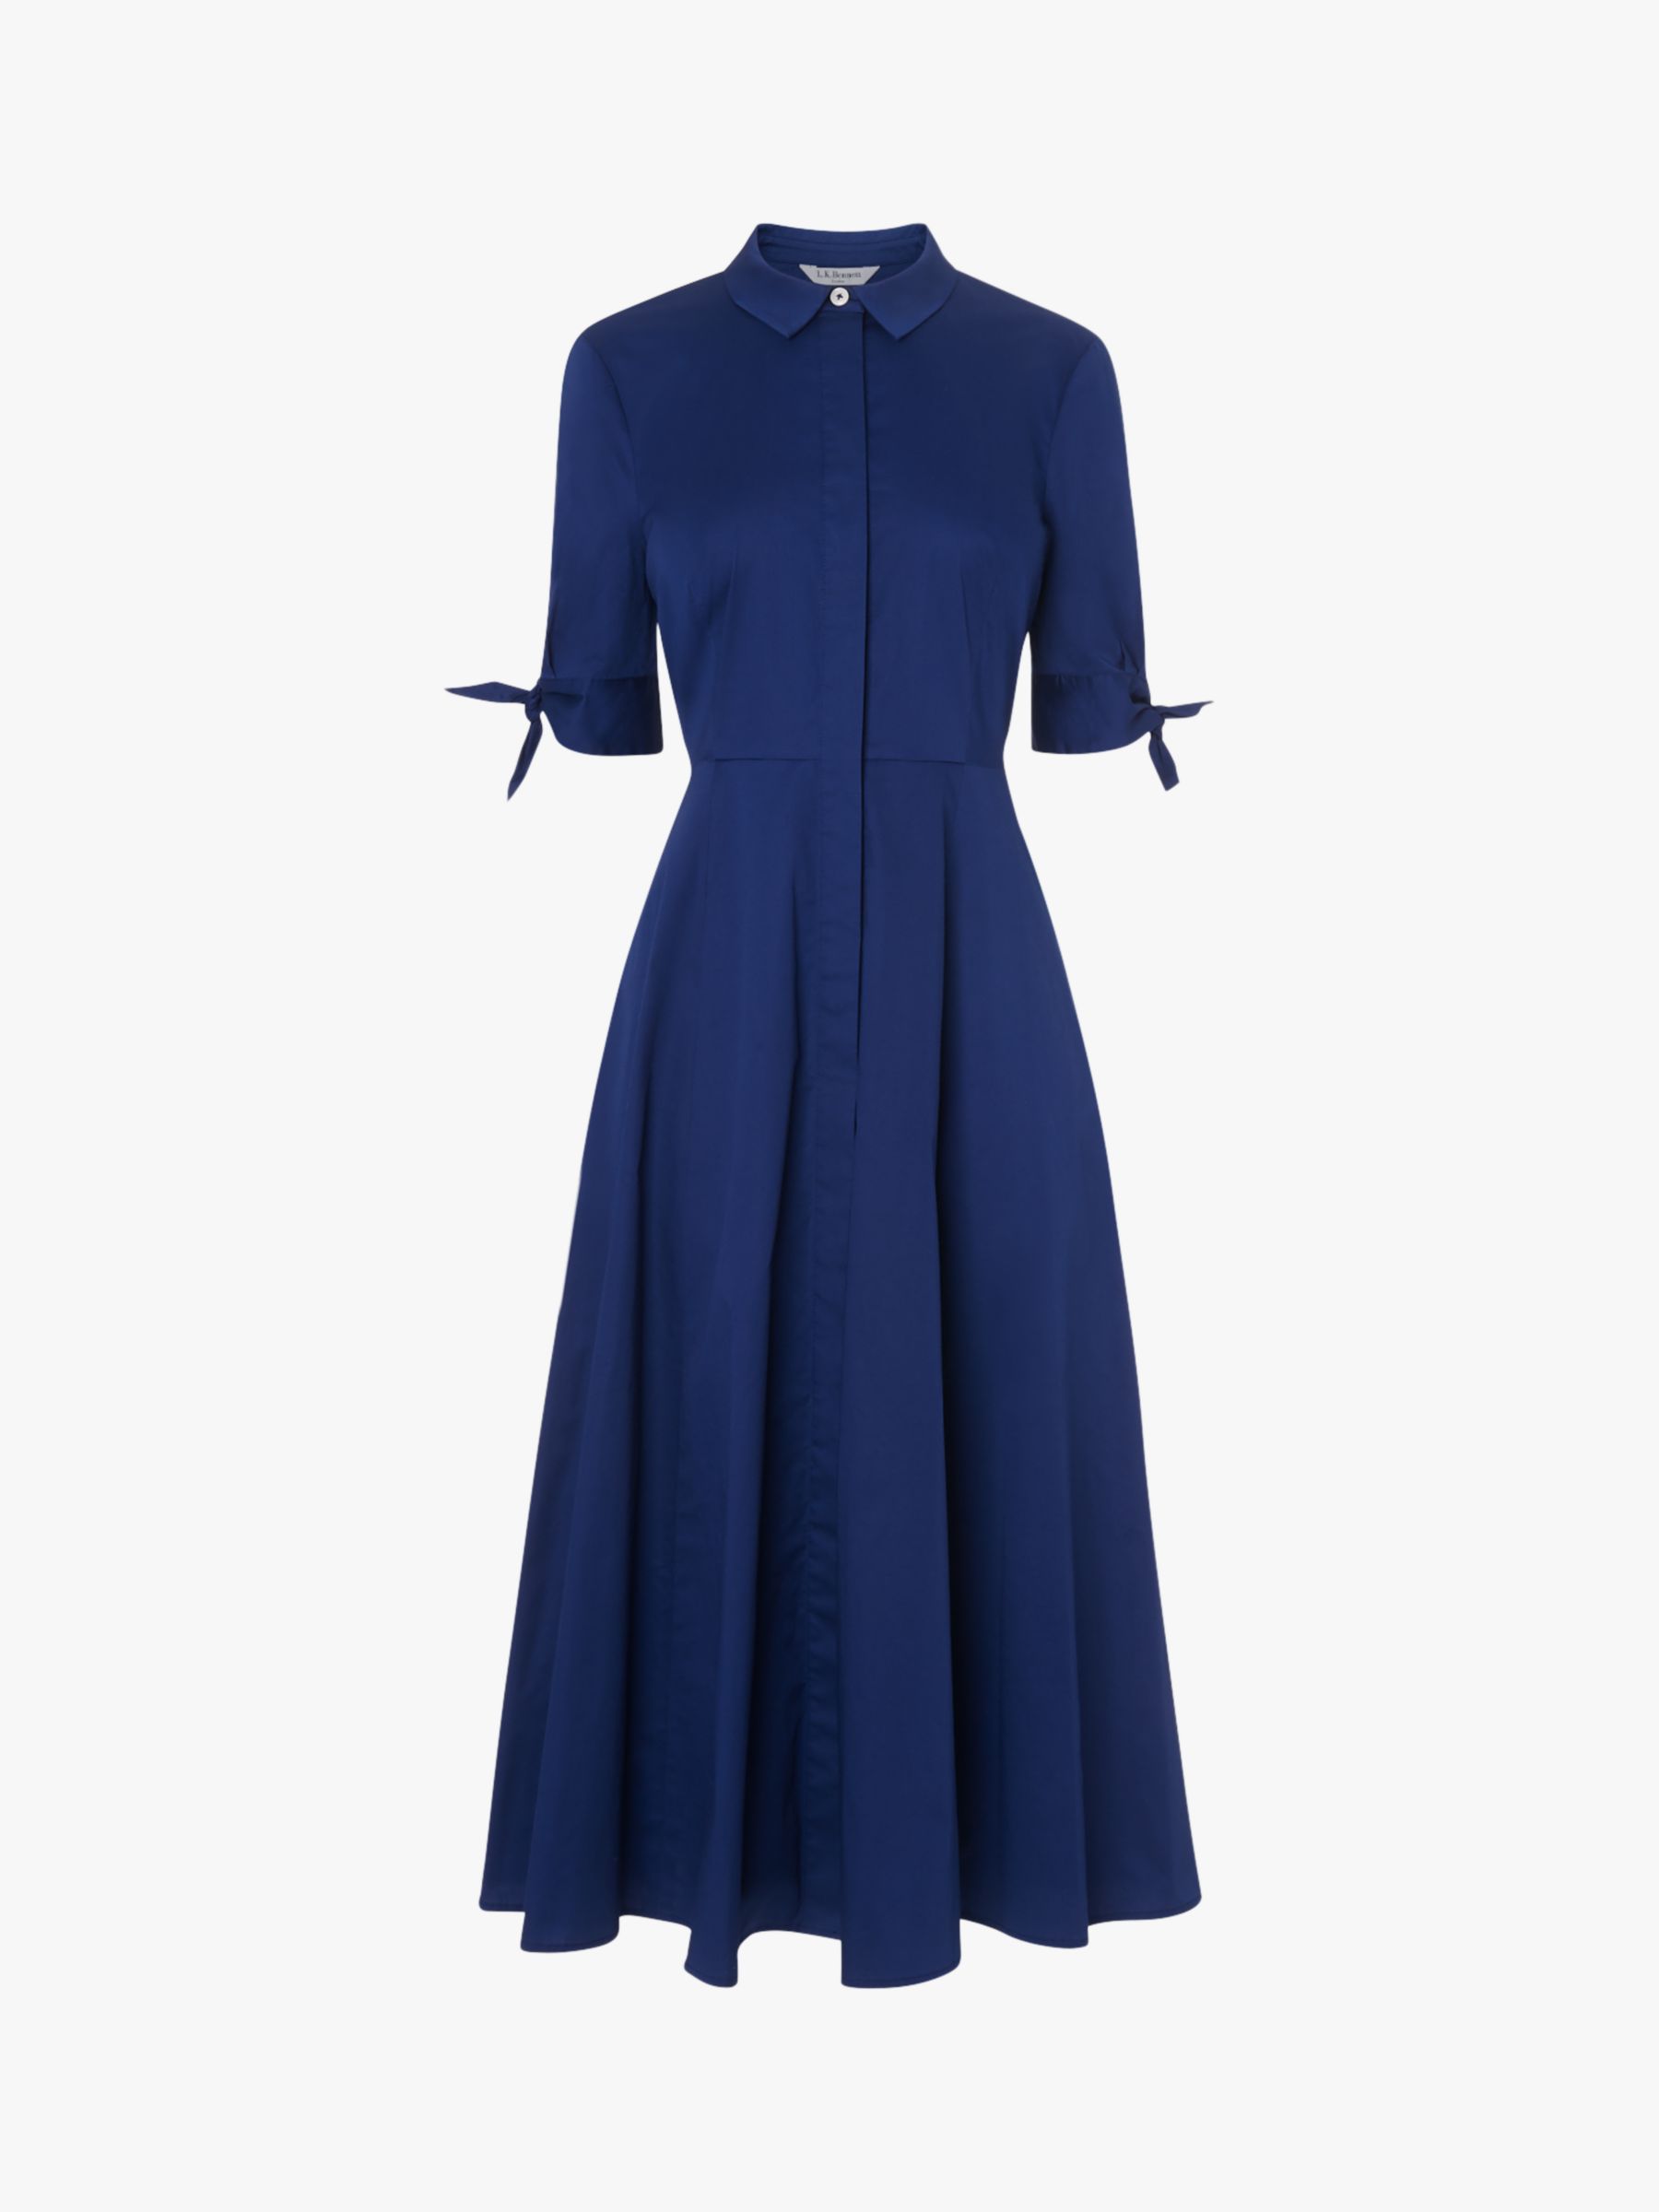 L.K.Bennett Darly Shirt Dress, Royal Blue